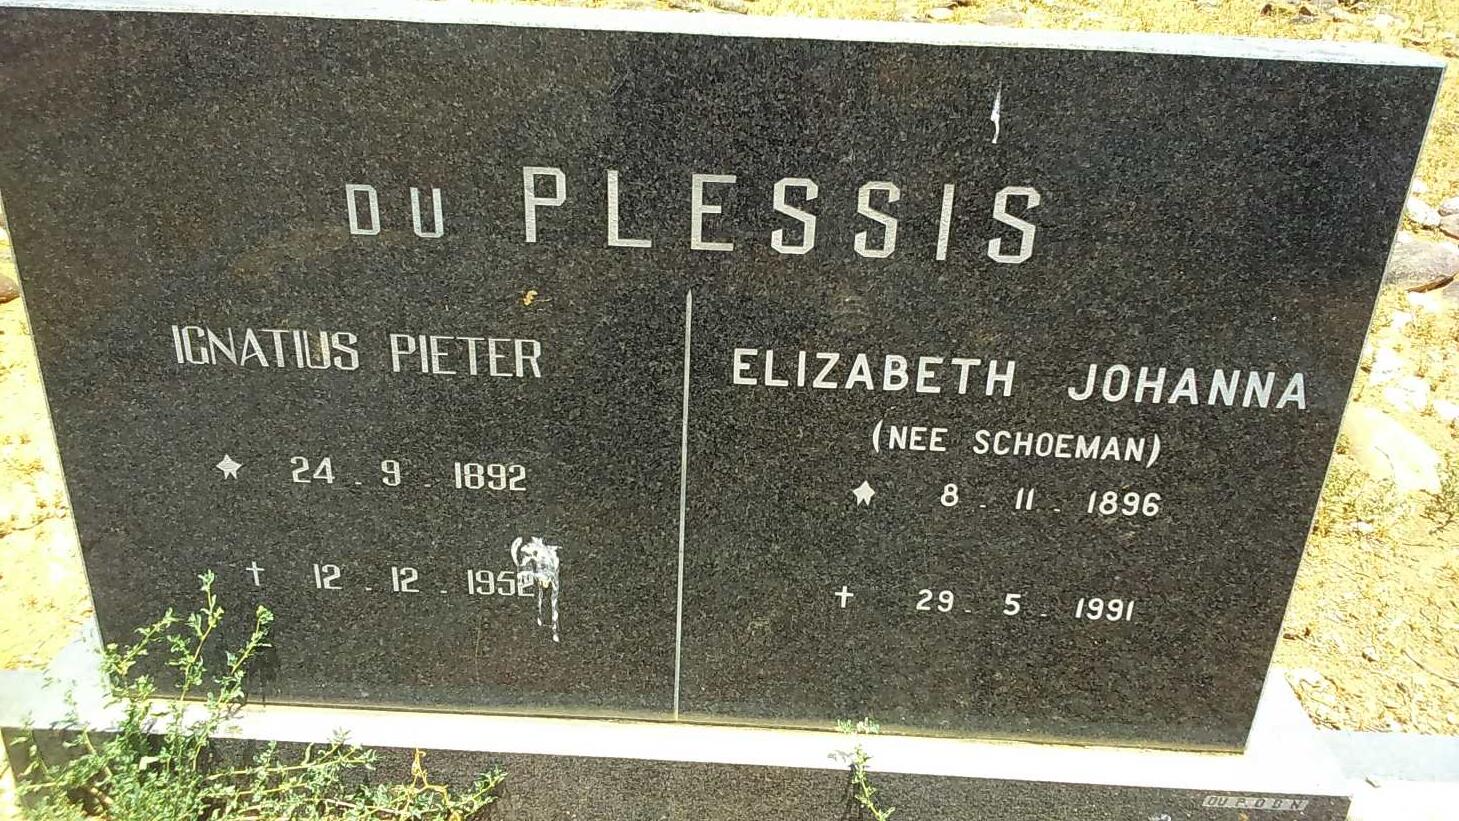 PLESSIS Ignatius Pieter, du 1892-1952 & Elizabeth Johanna SCHOEMAN 1896-1991